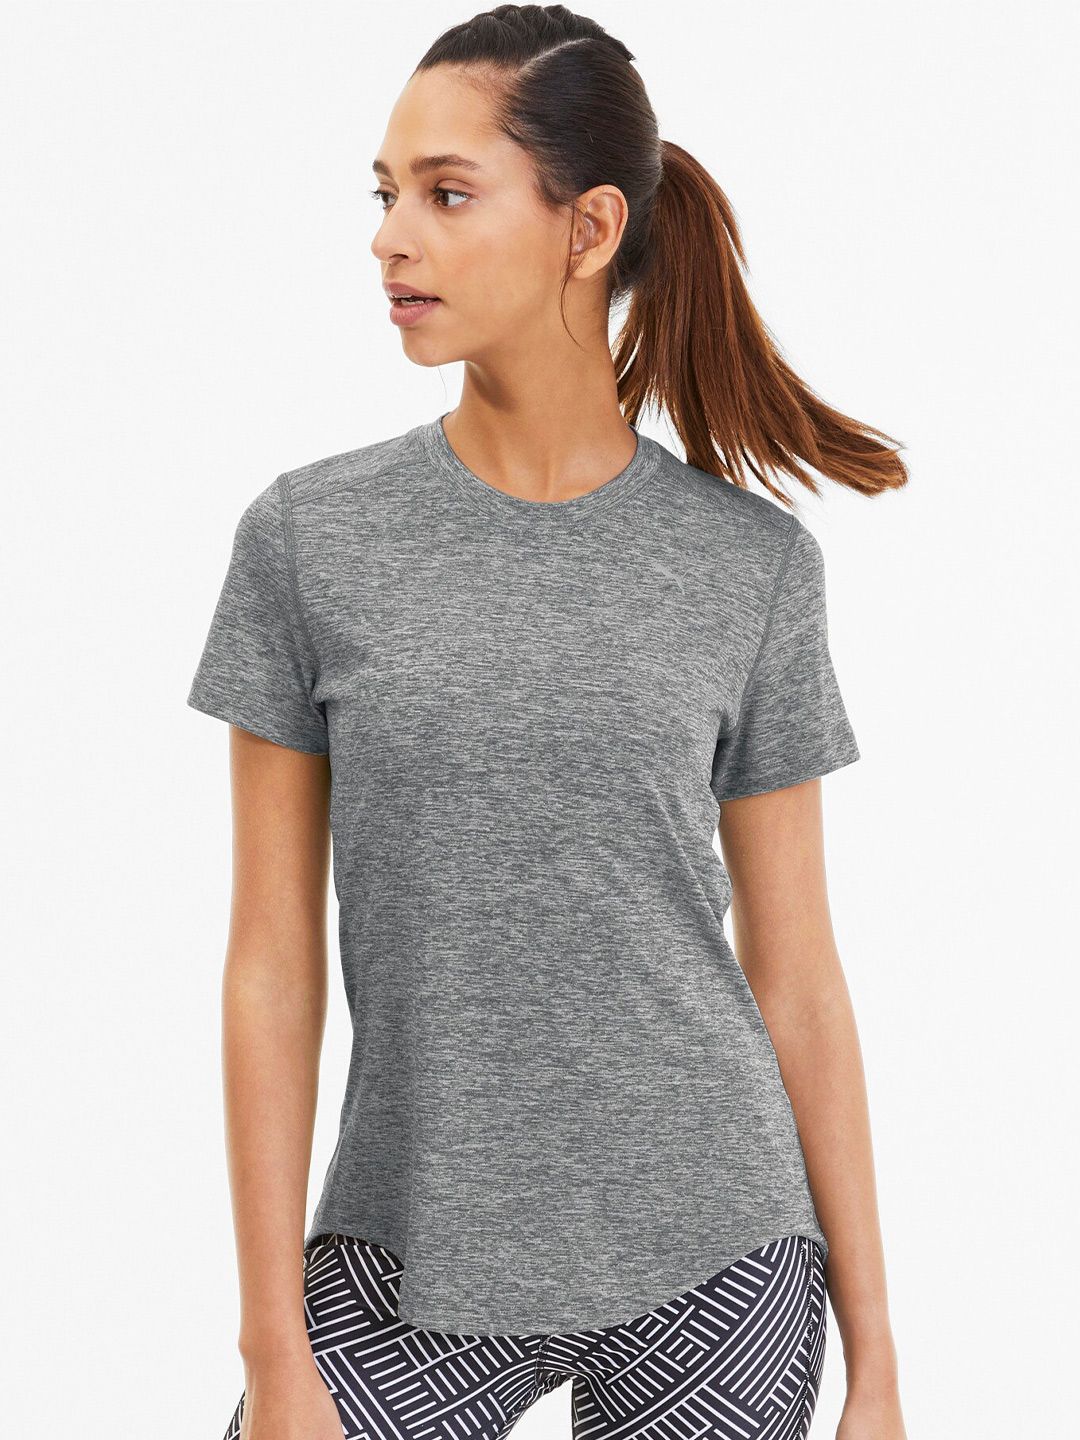 Puma Women Grey T-shirt Price in India